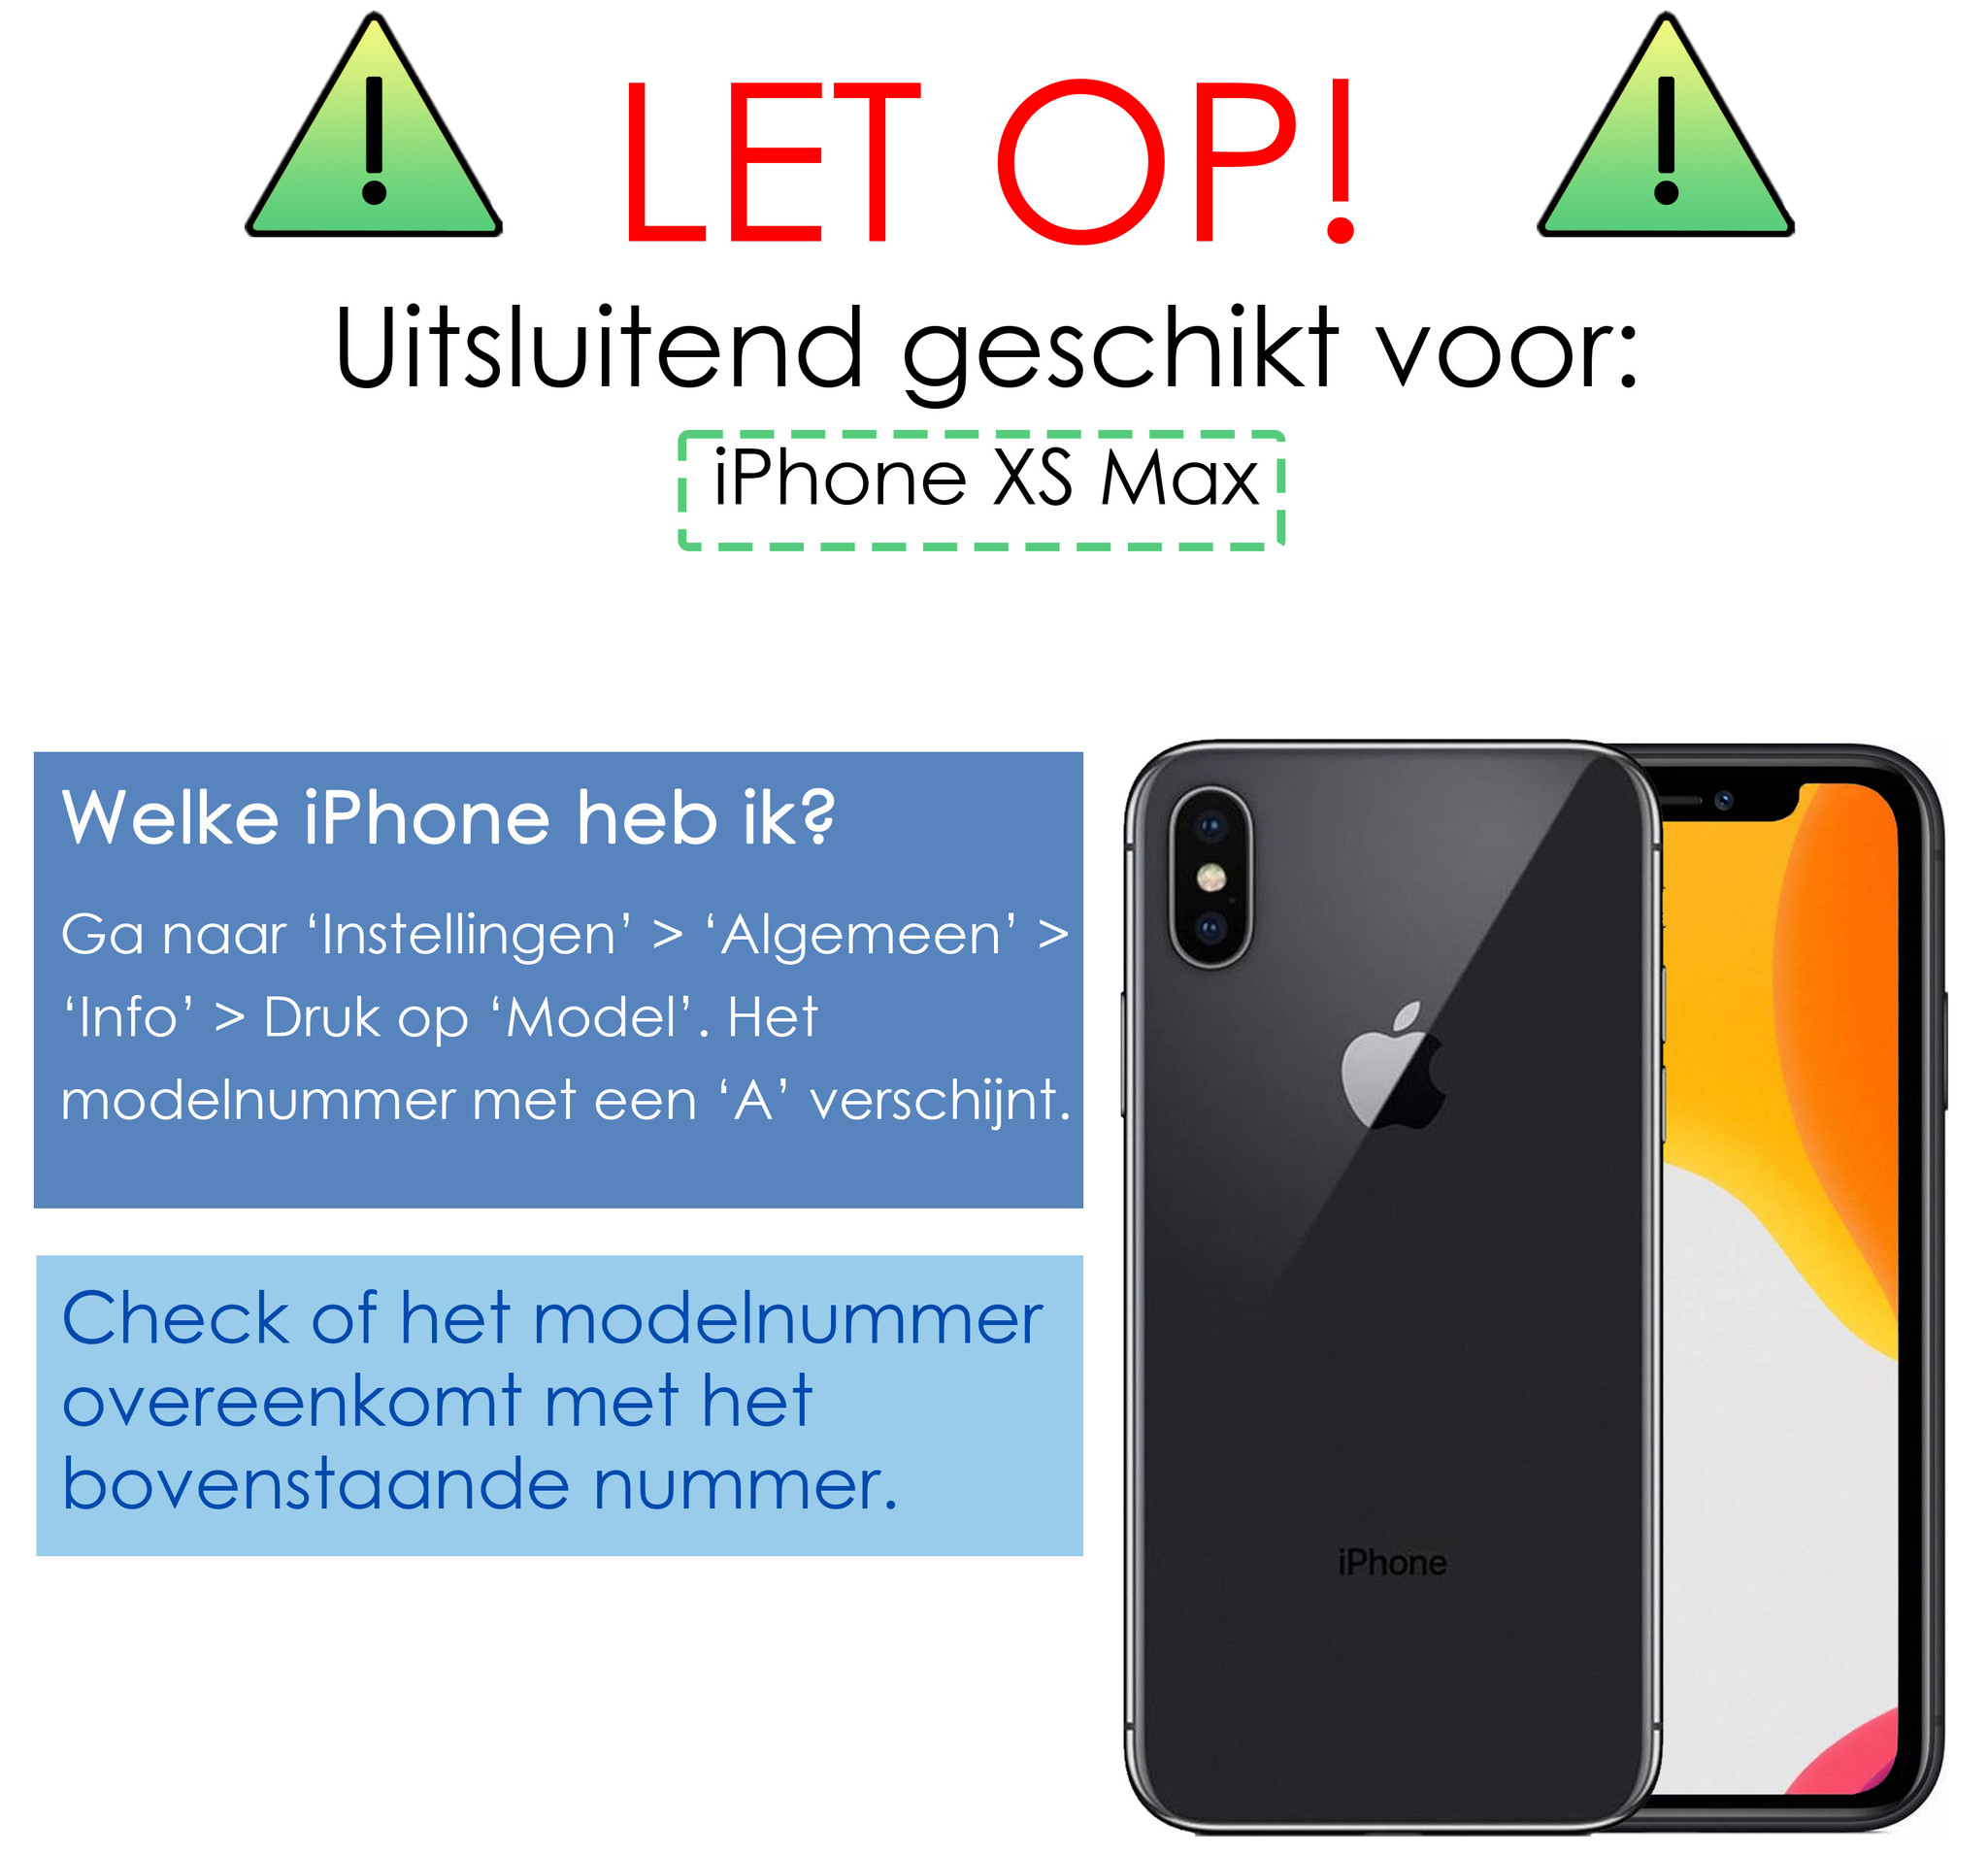 NoXx Hoes voor iPhone Xs Max Hoesje Back Cover Siliconen Case Hoes - Zwart